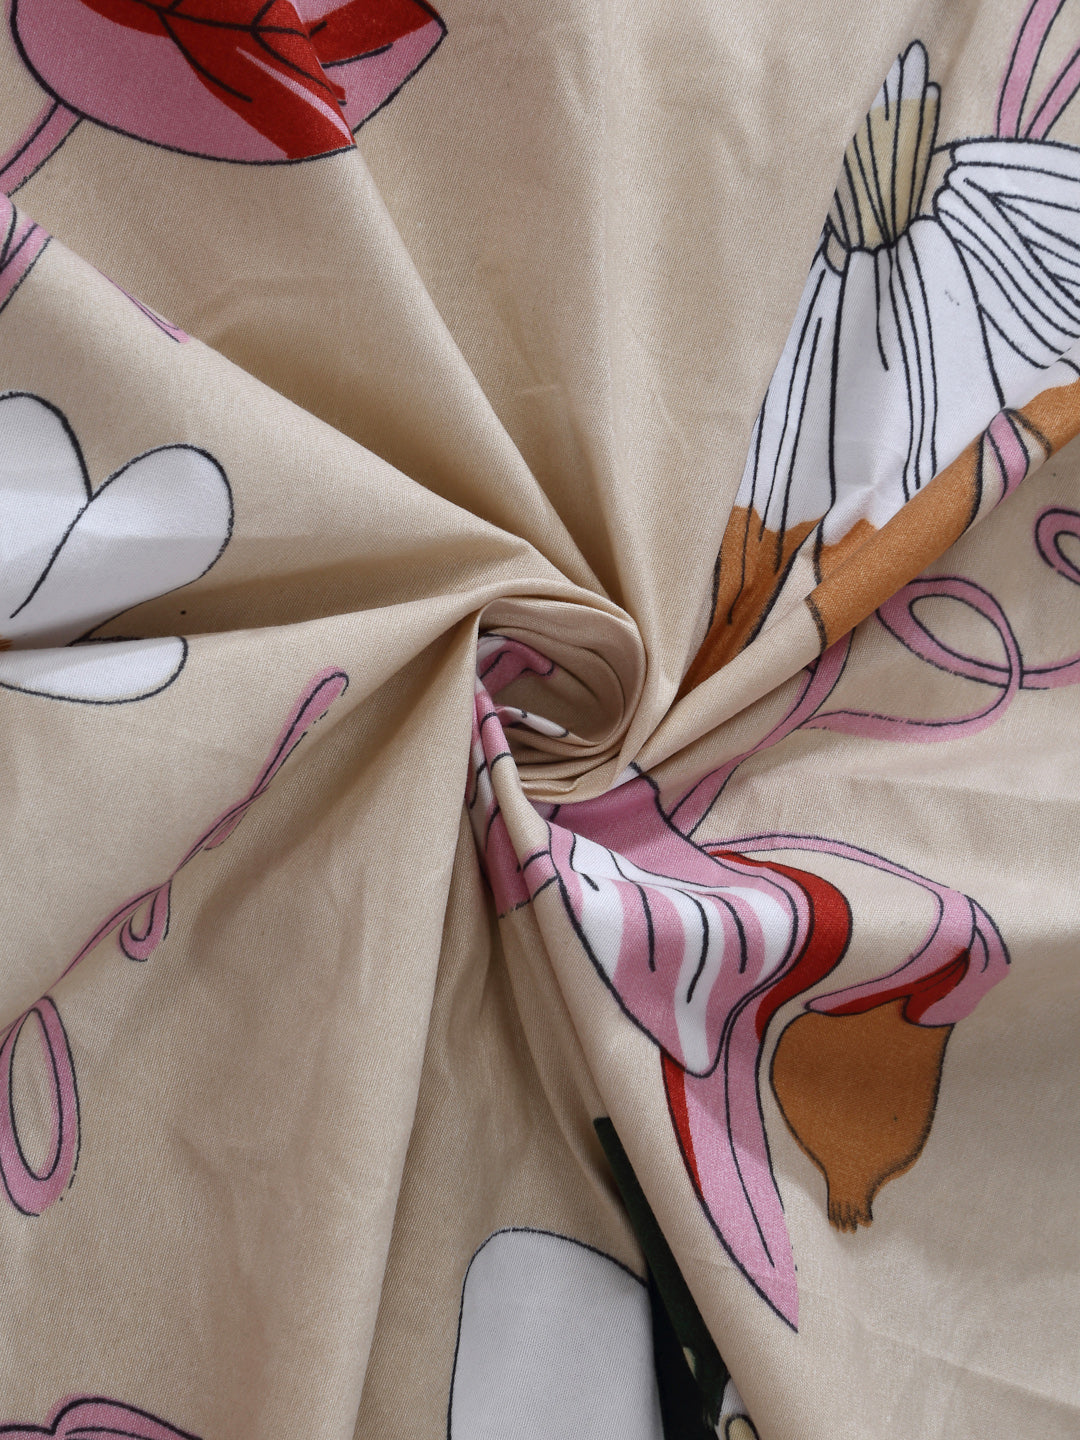 Arrabi Brown Floral TC Cotton Blend Single Size Bedsheet with 1 Pillow Cover (215 x 150 cm)